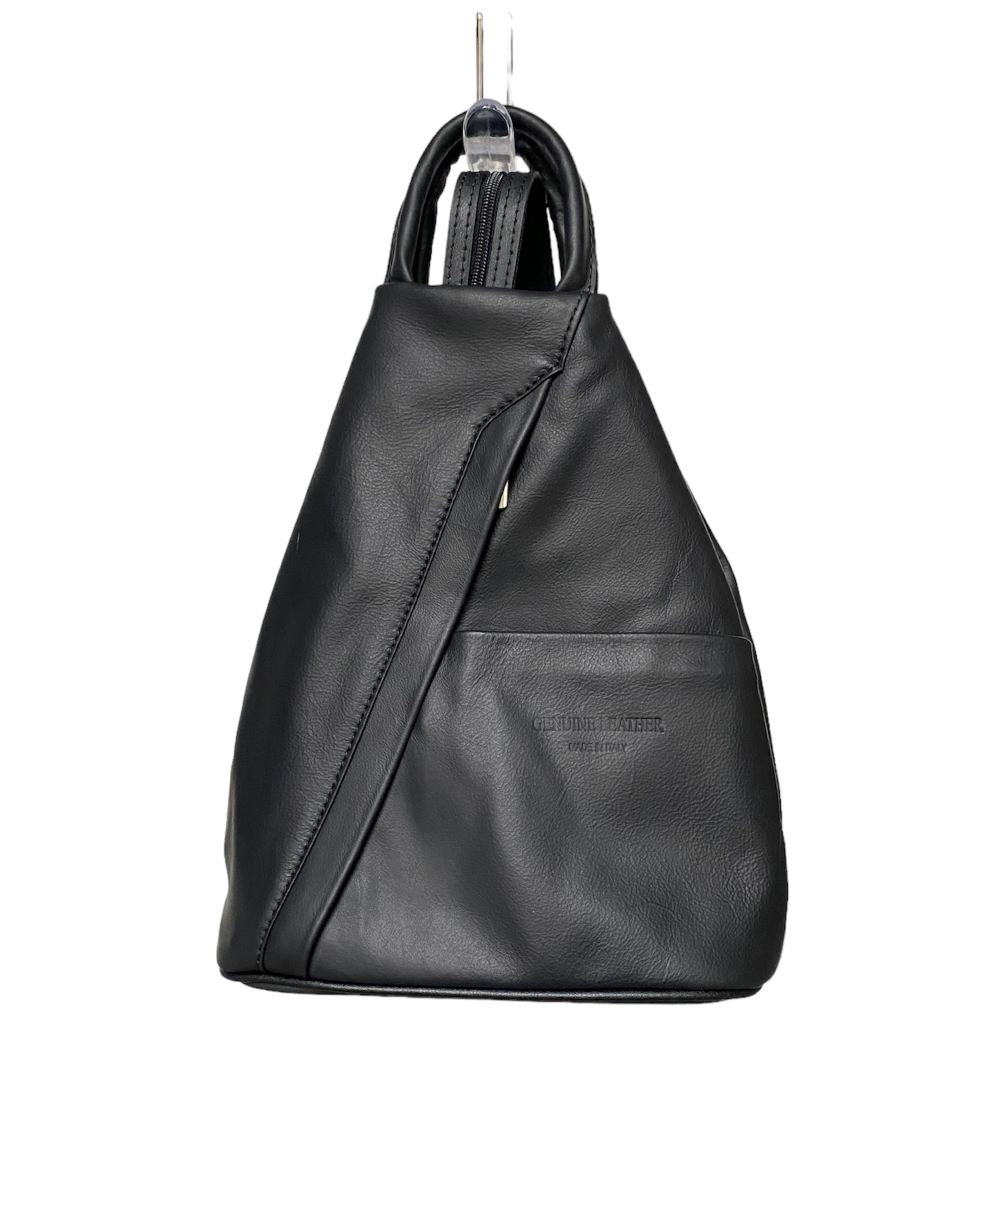 LaGaksta Submedium Backpack Purse – LaGaksta Handbags